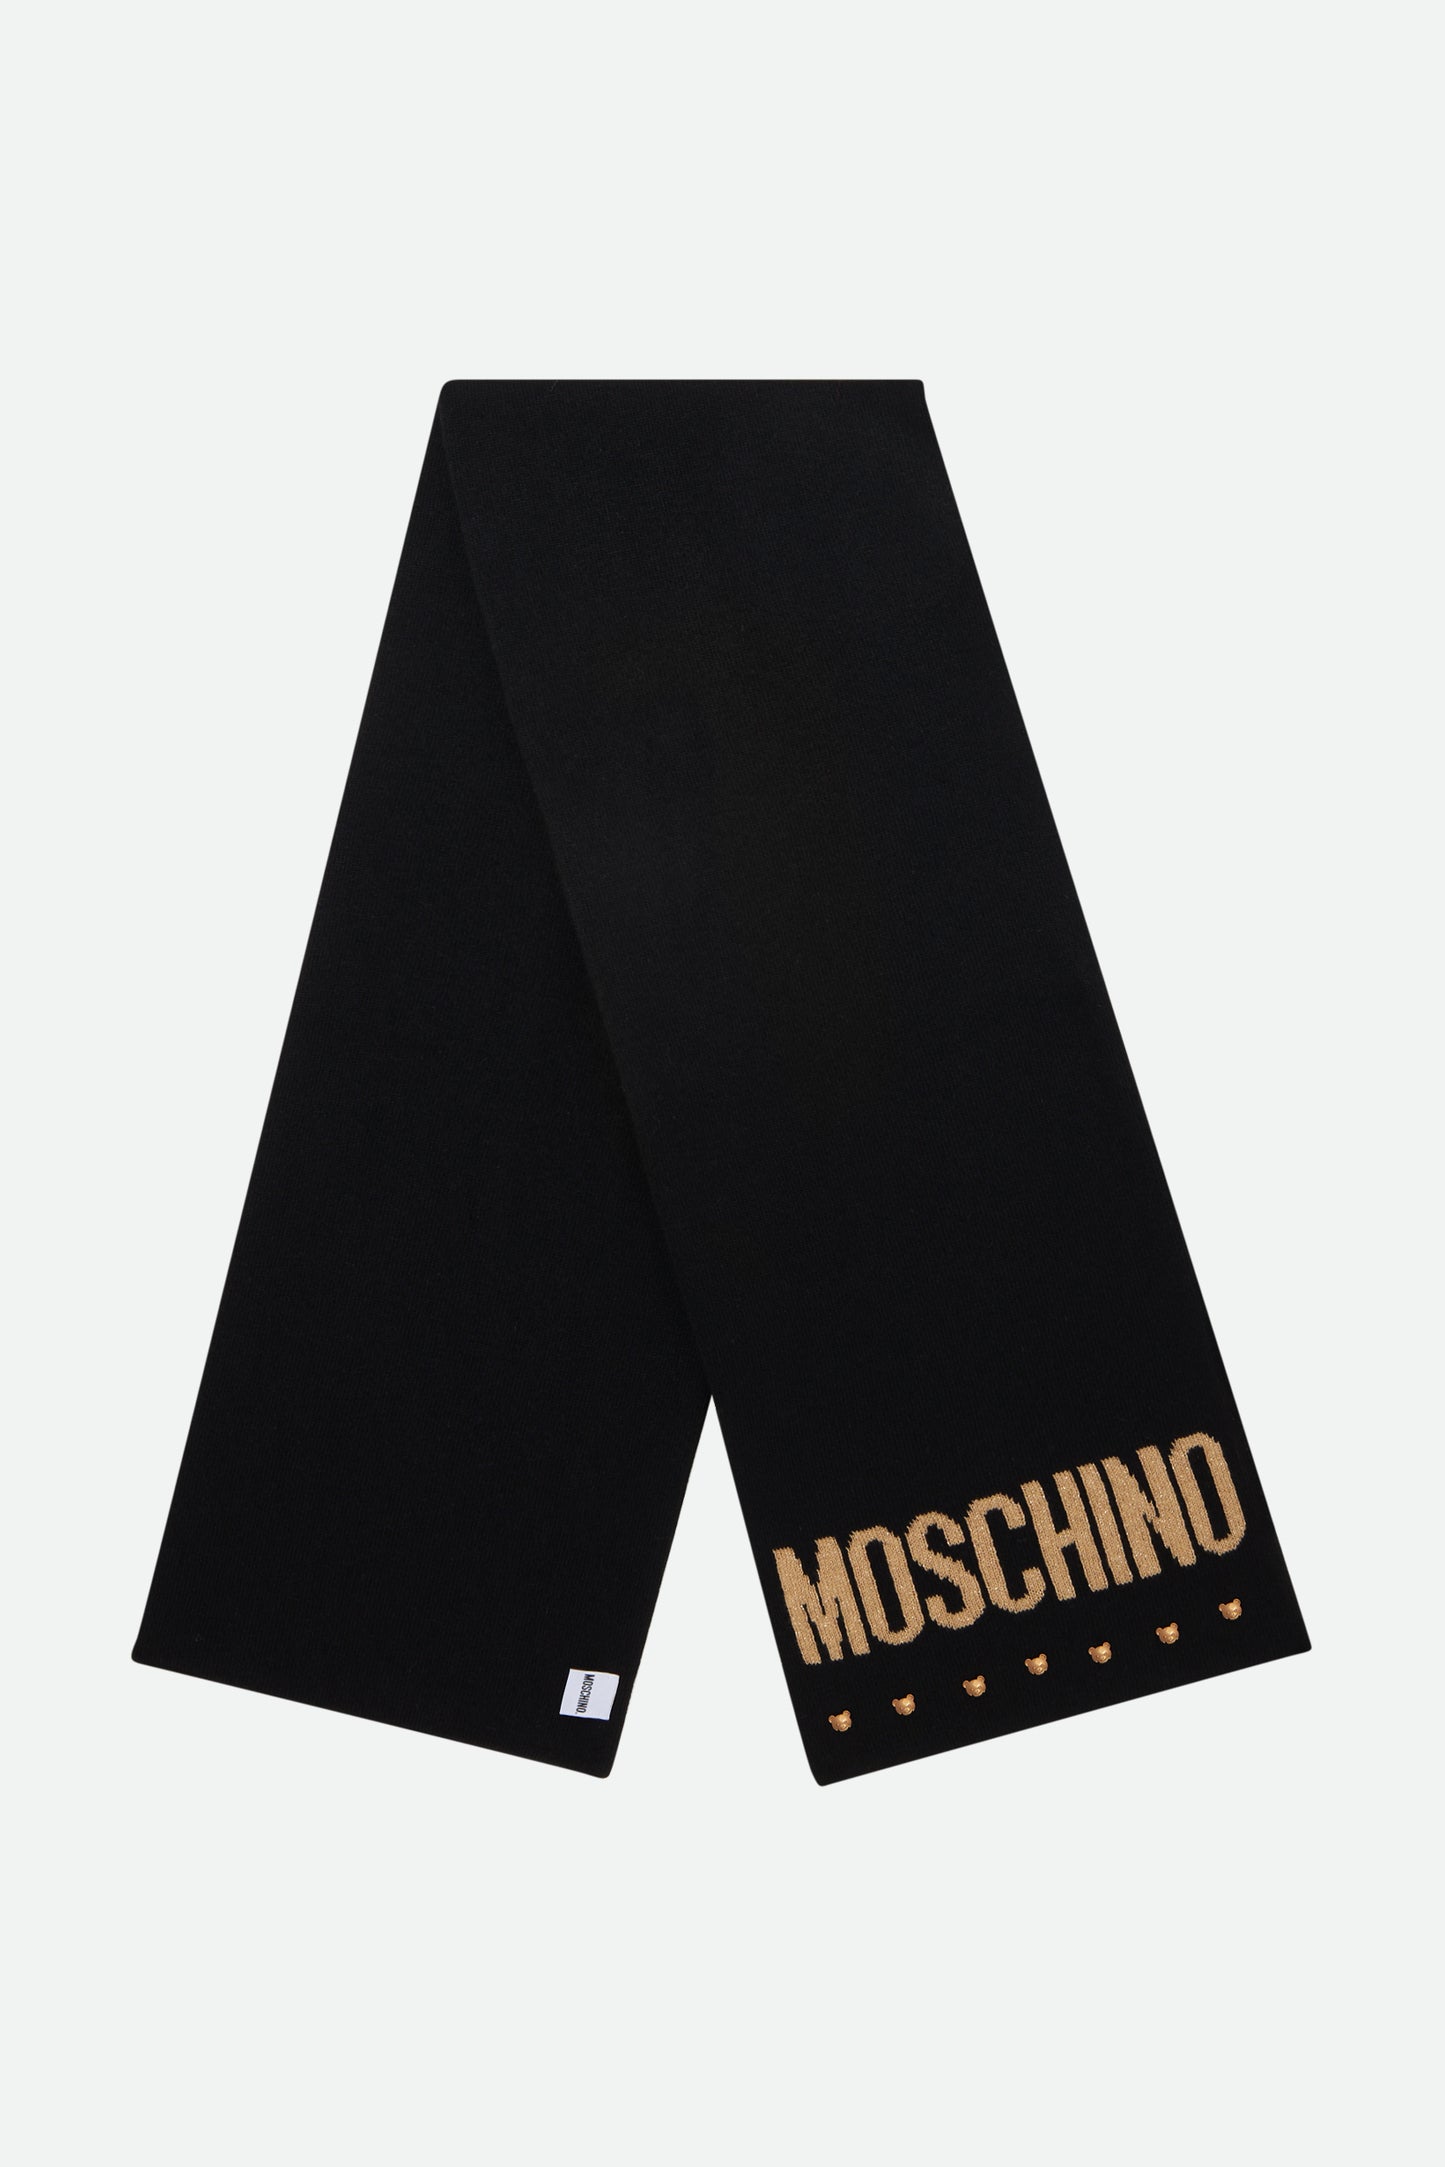 Moschino Black Wool Scarf